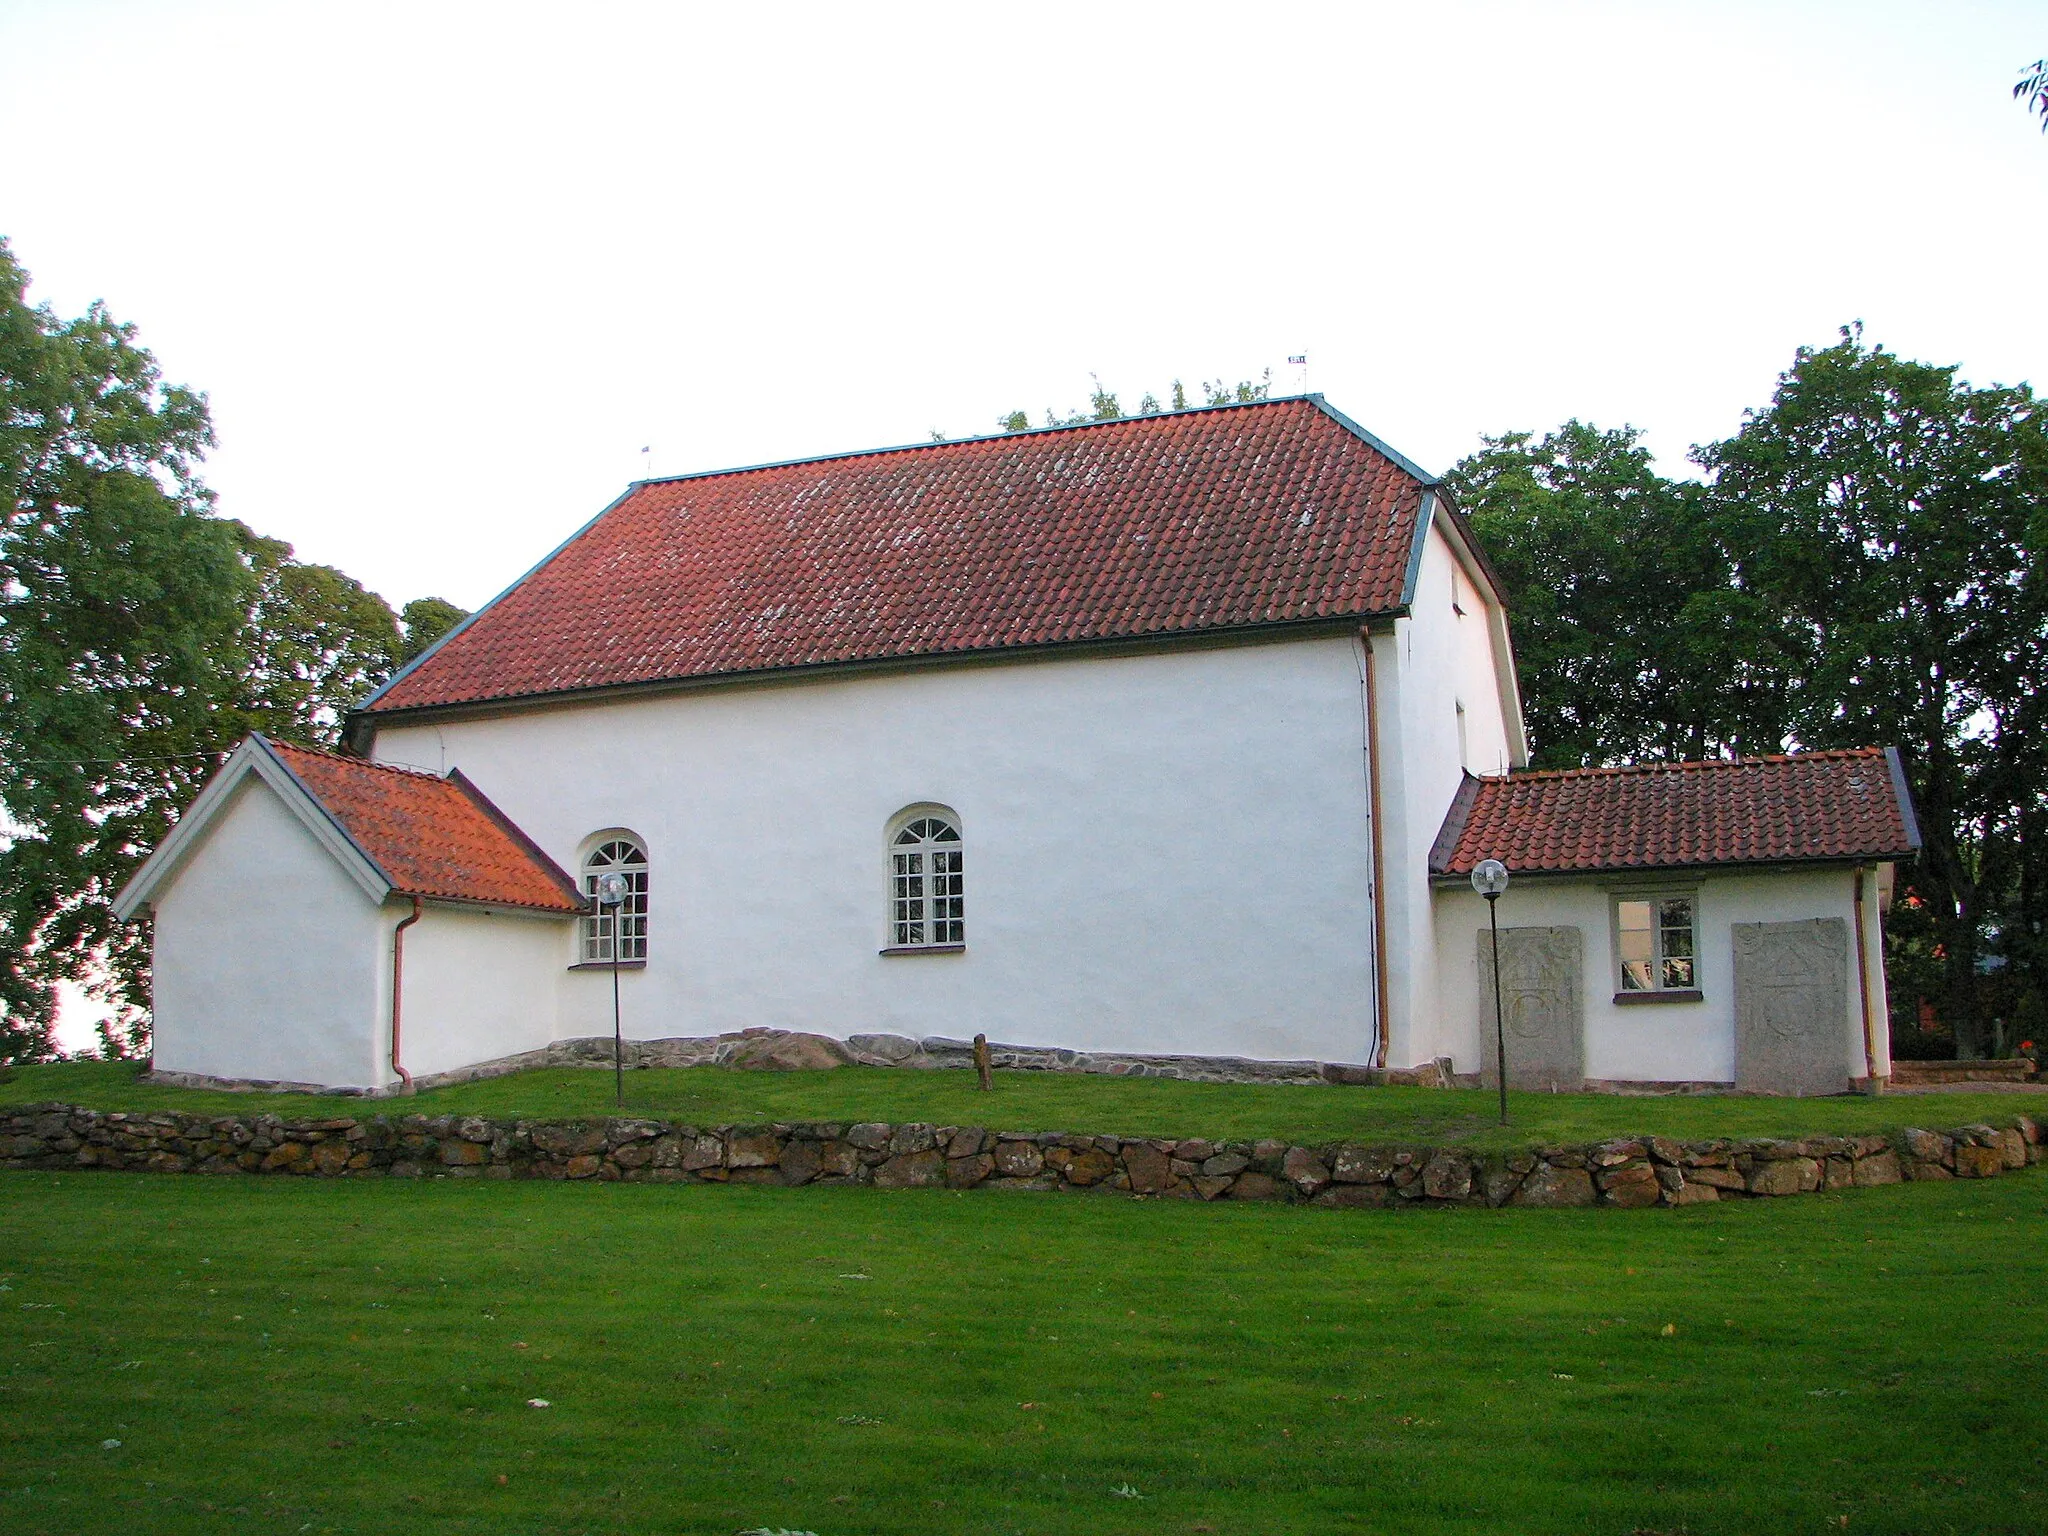 Photo showing: The church of Södra Lundby viewed from the north. The church is situated in Södra Lundby parish, Laske hundred, Vara municipality, former Skaraborg county, the Diocese of Skara, Västergötland, Västra Götaland county, Sweden.